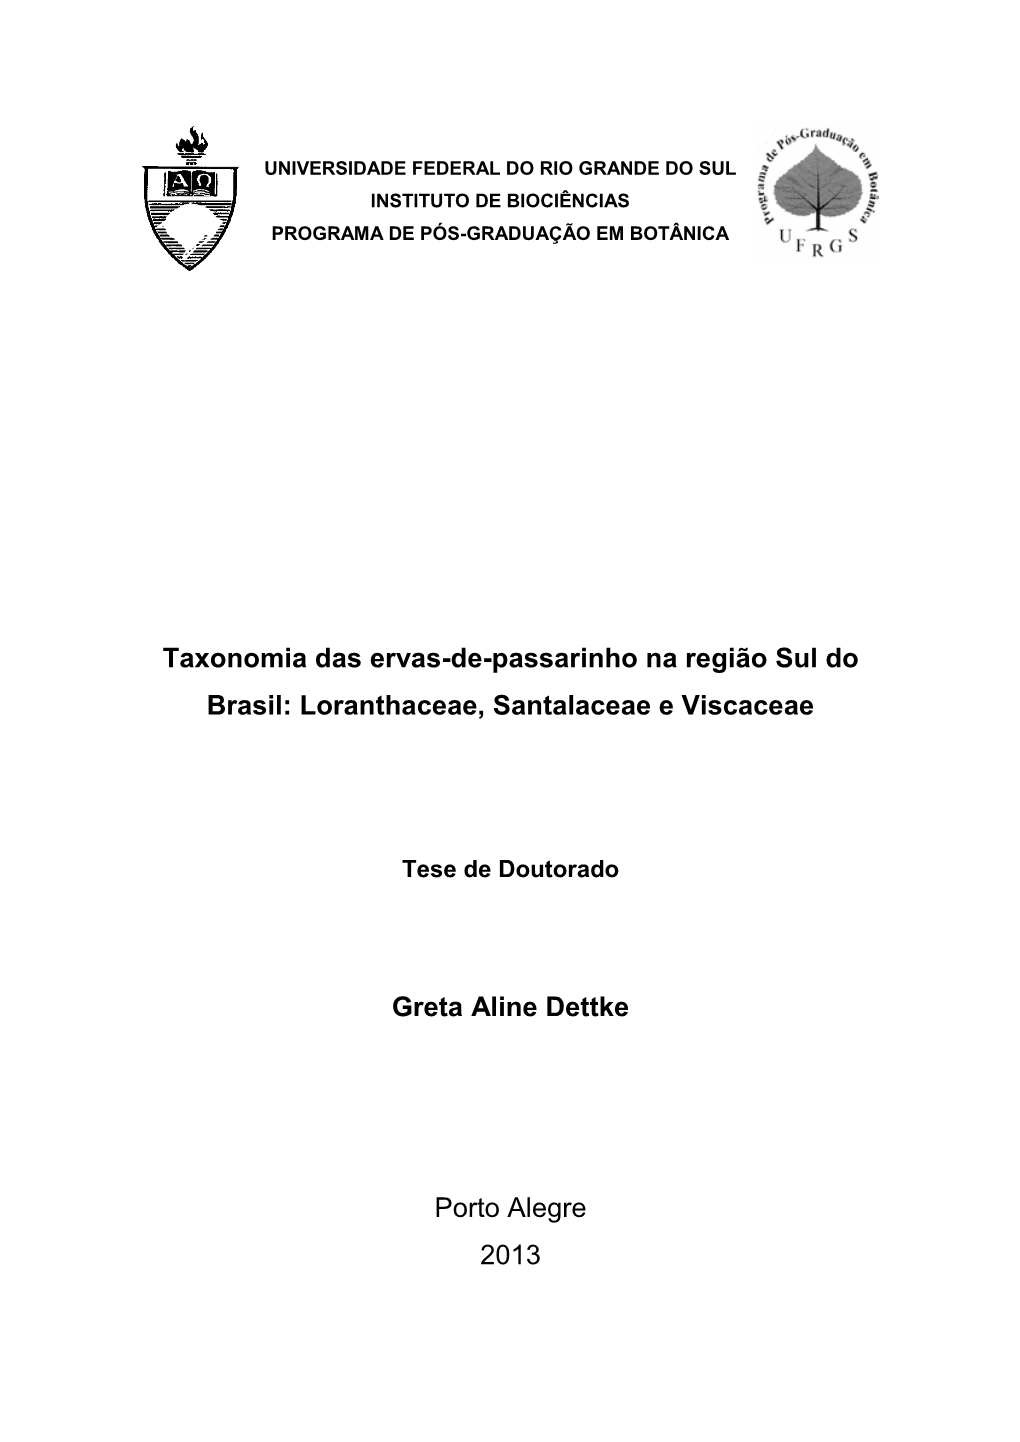 Taxonomia Das Ervas-De-Passarinho Na Região Sul Do Brasil: Loranthaceae, Santalaceae E Viscaceae